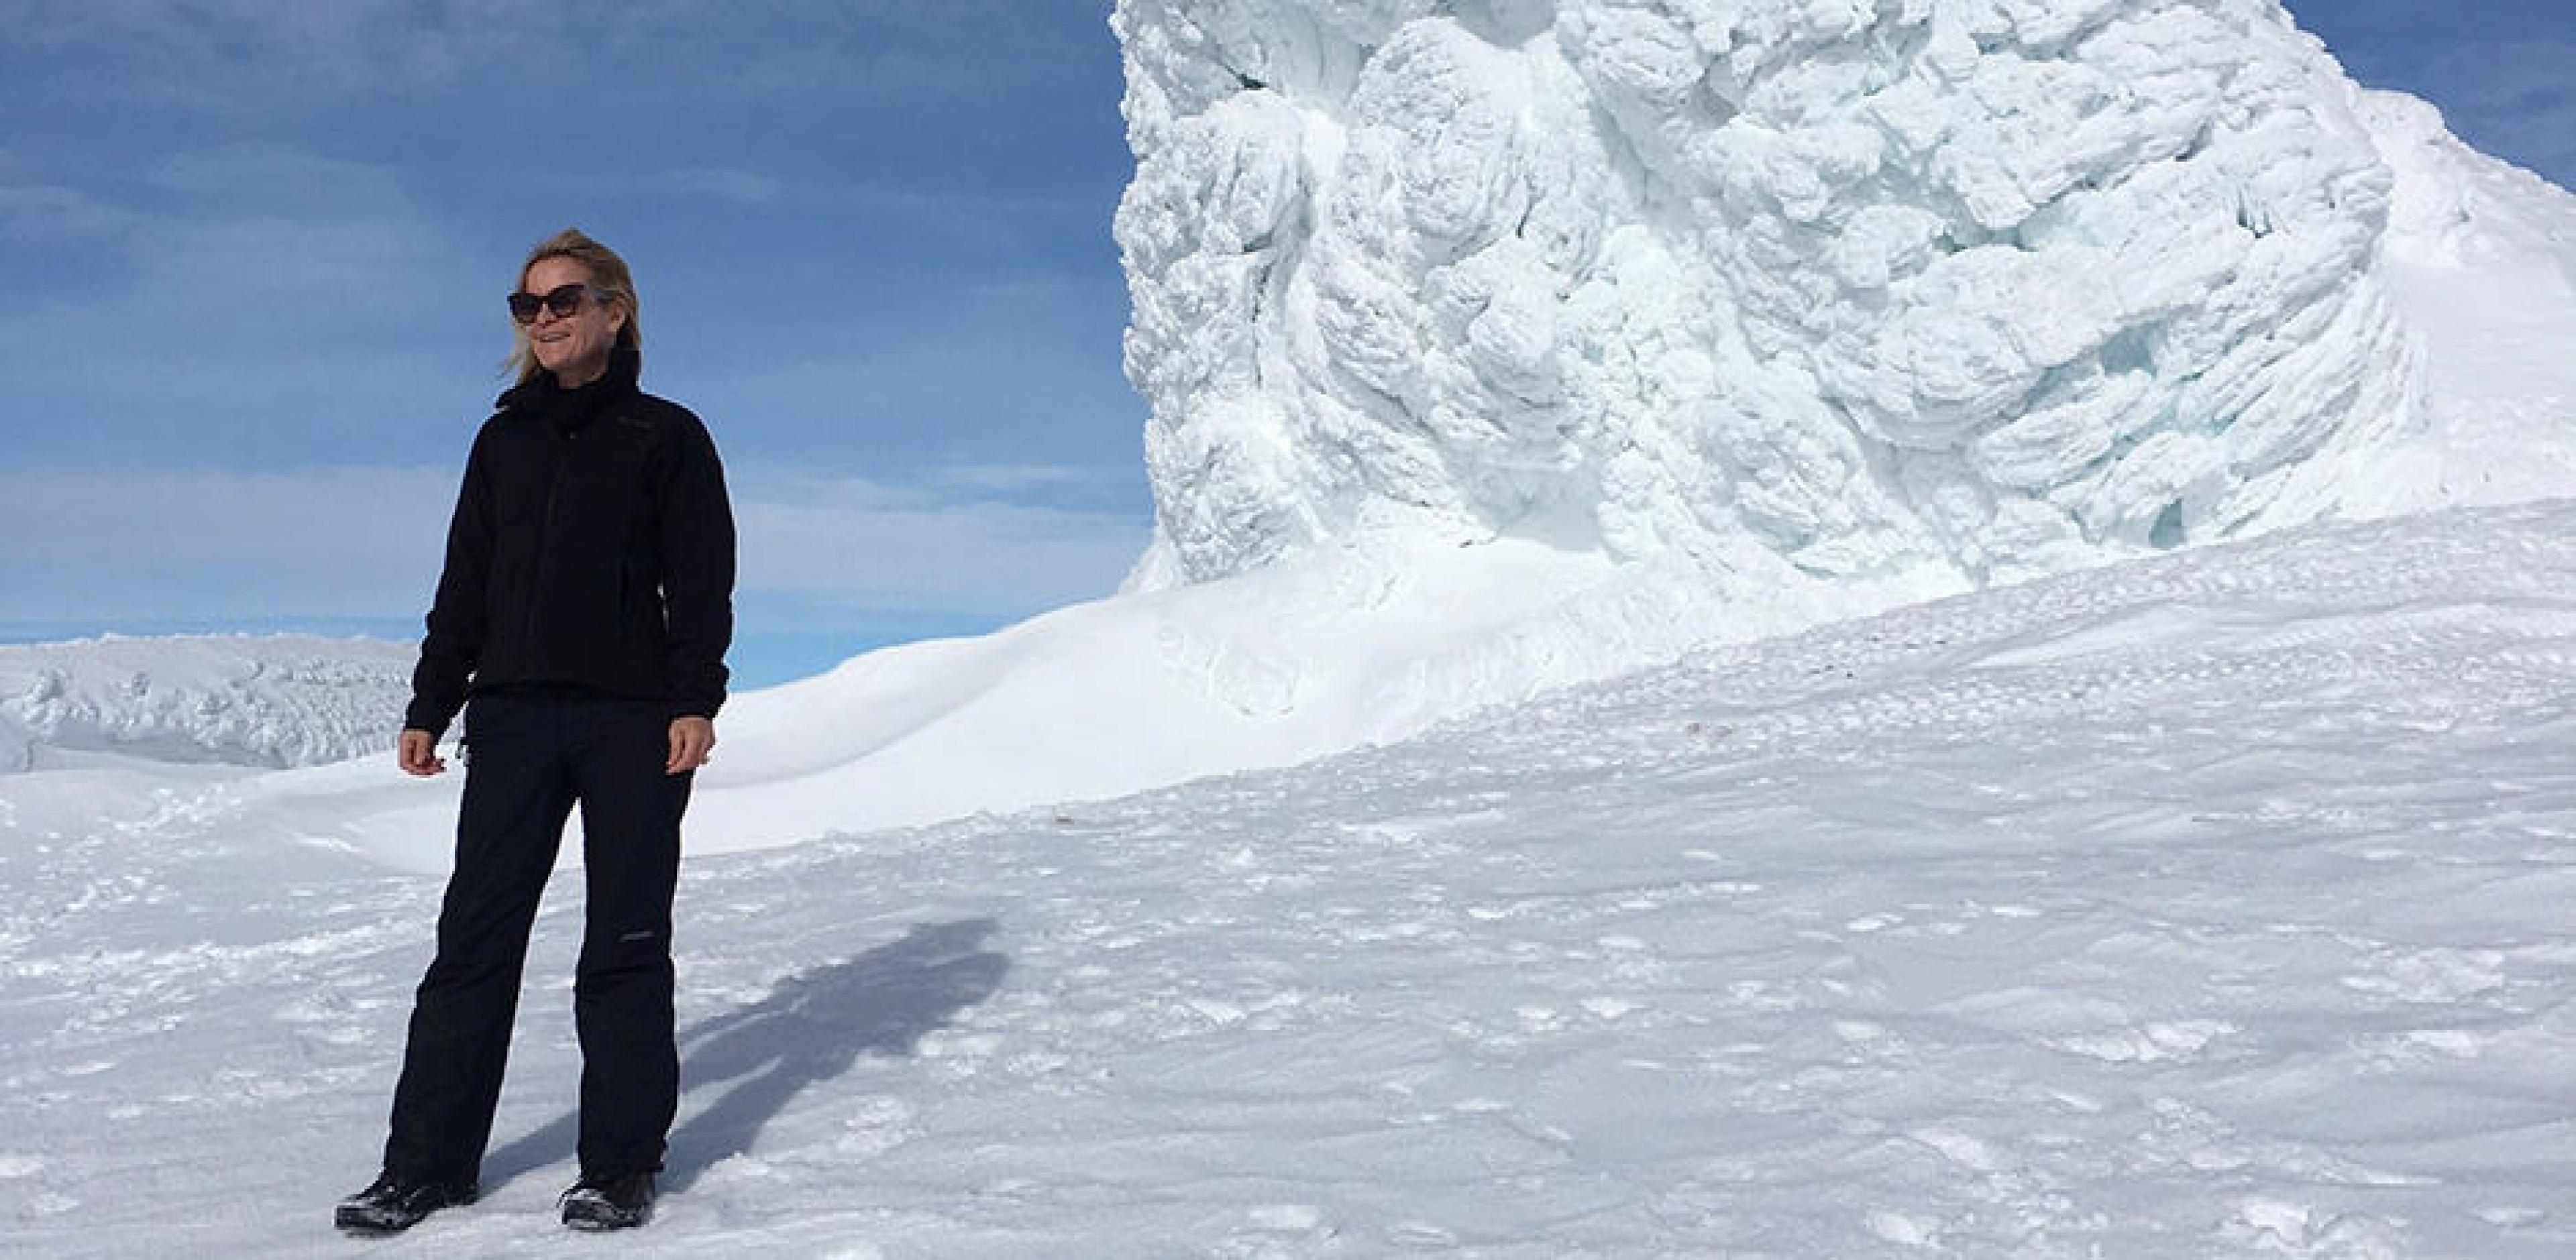 Melissa Biggs Bradley on snowy landscape in Iceland